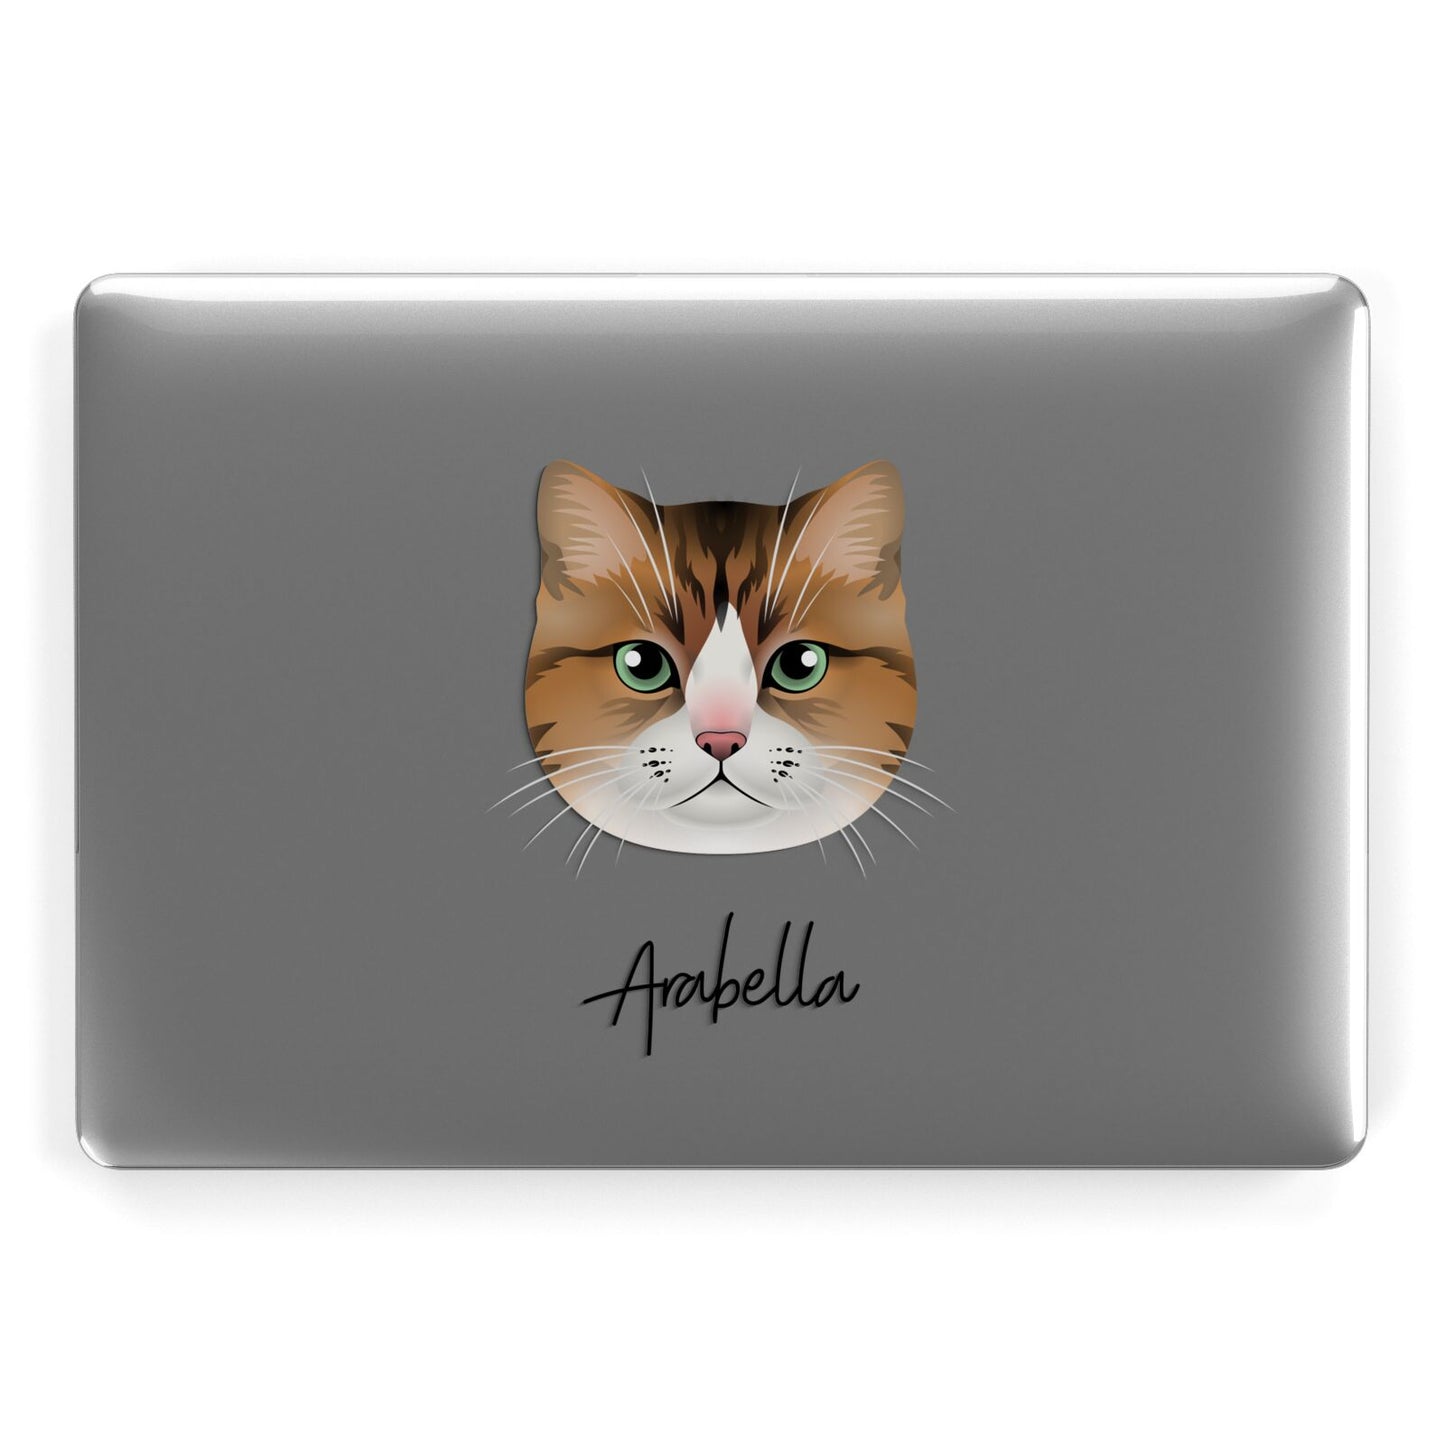 Custom Cat Illustration with Name Apple MacBook Case